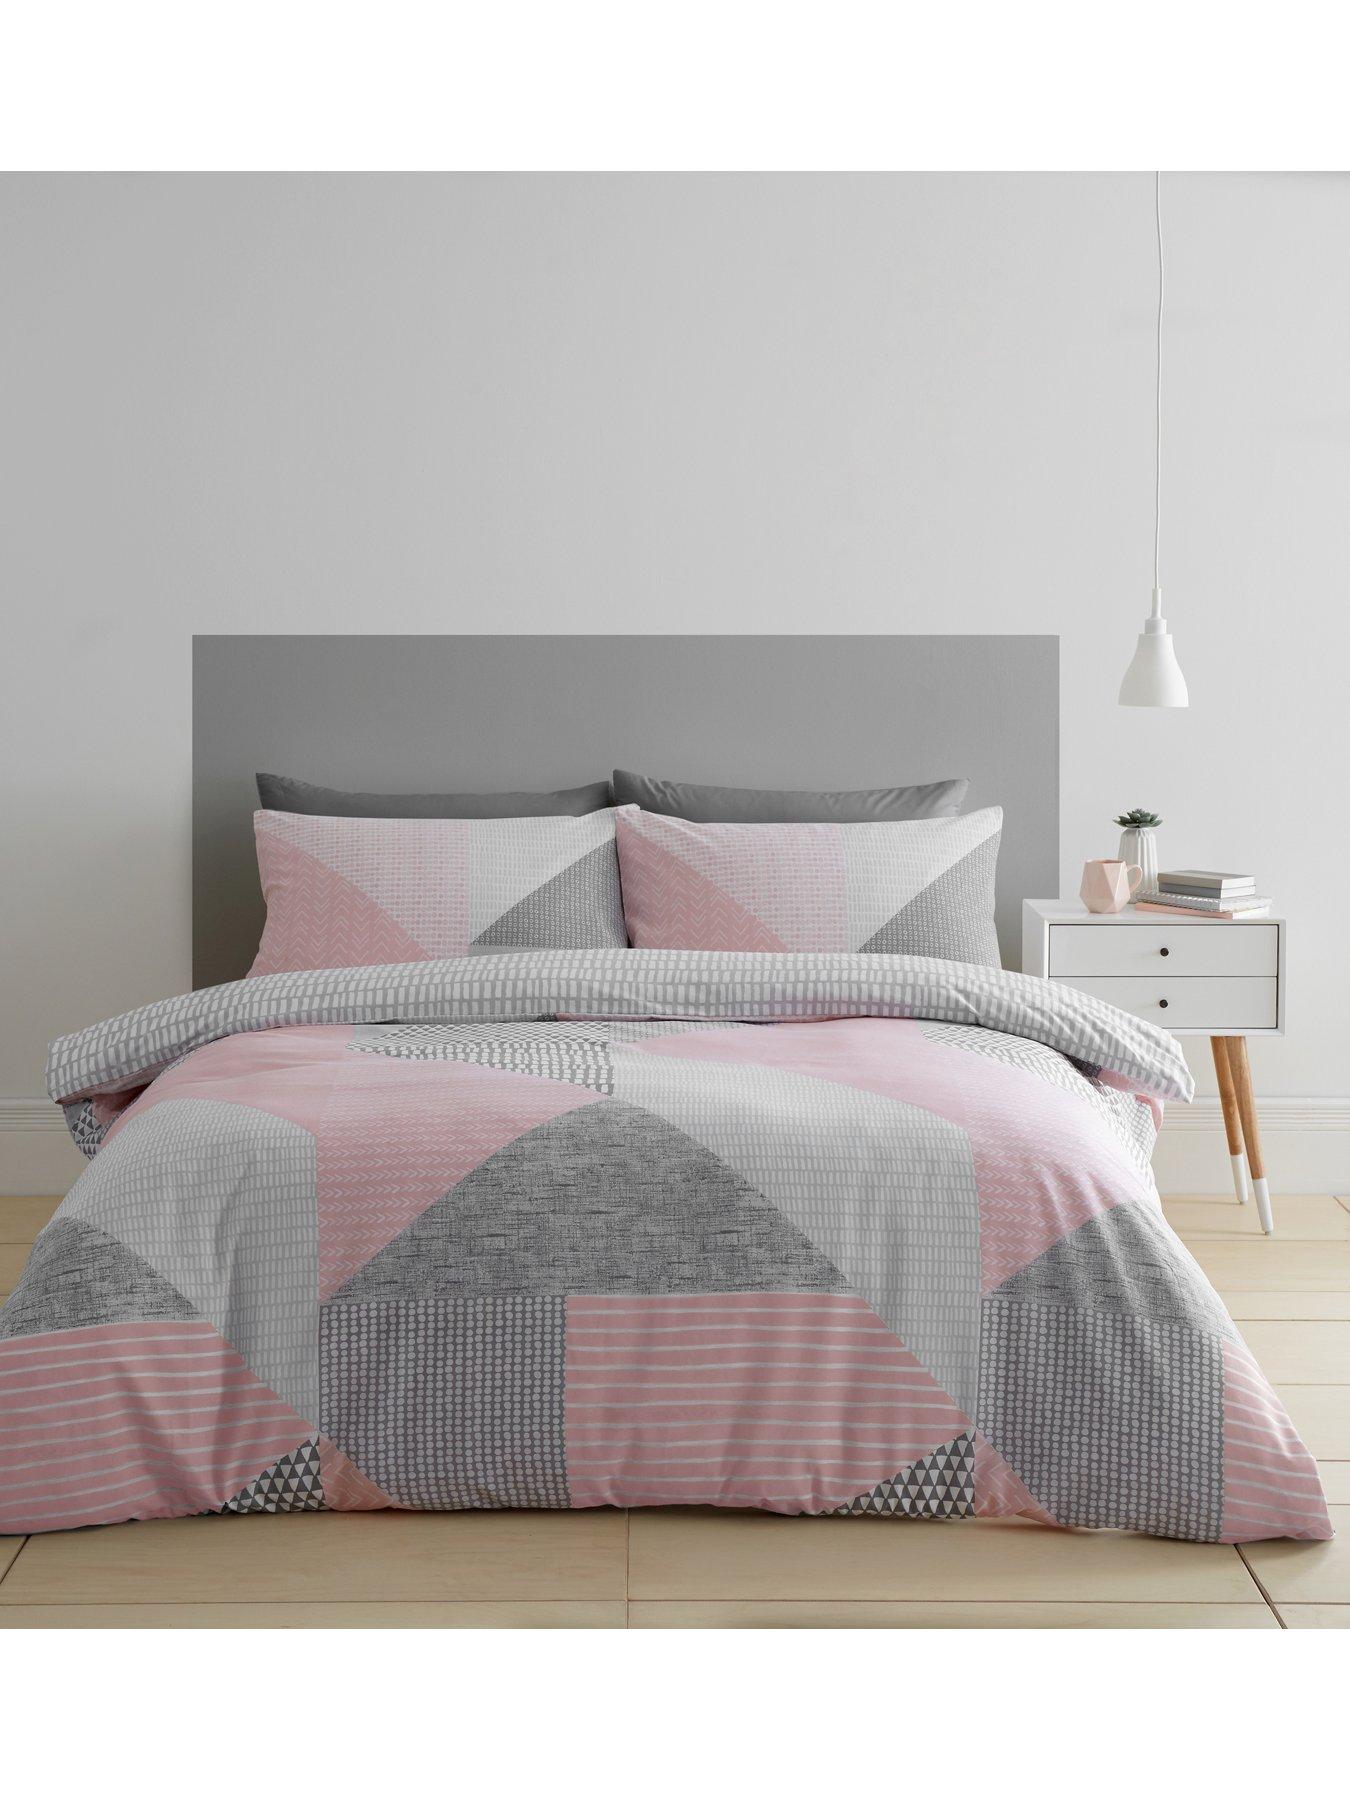 Double 4ft 6in Pink Duvet Covers Bedding Home Garden